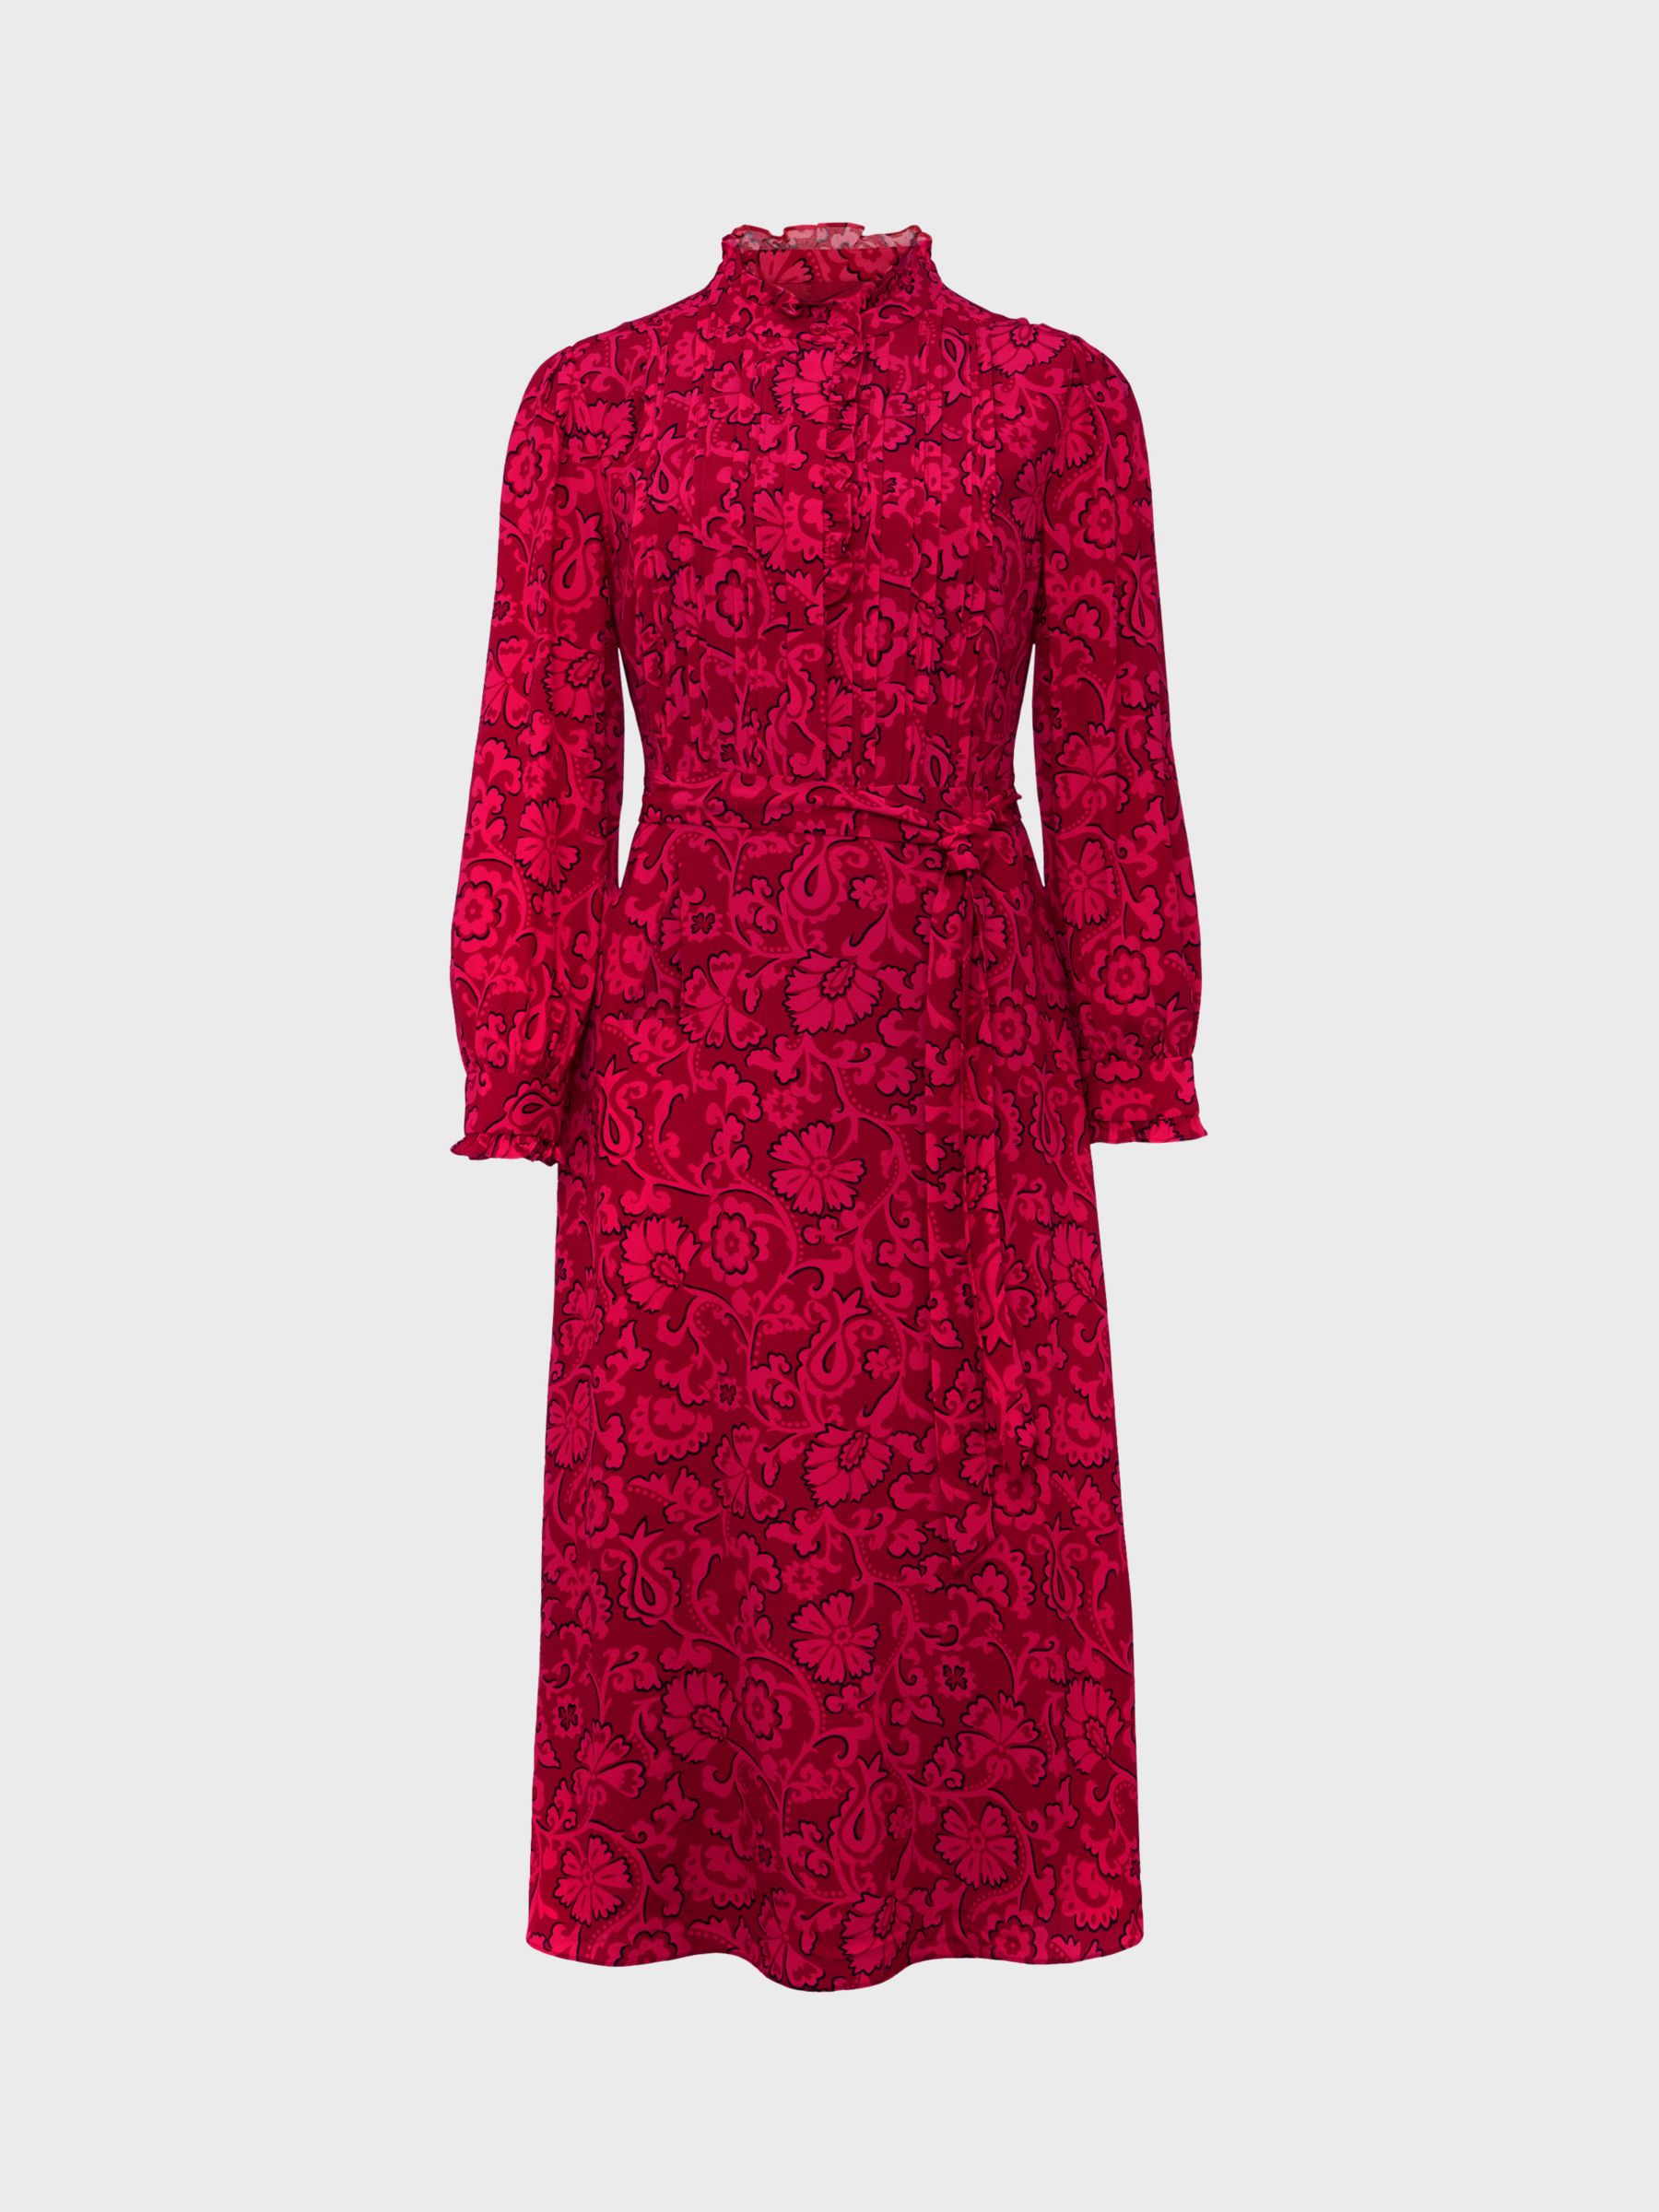 Hobbs Eleanora Midi Dress, Red/Pink at John Lewis & Partners